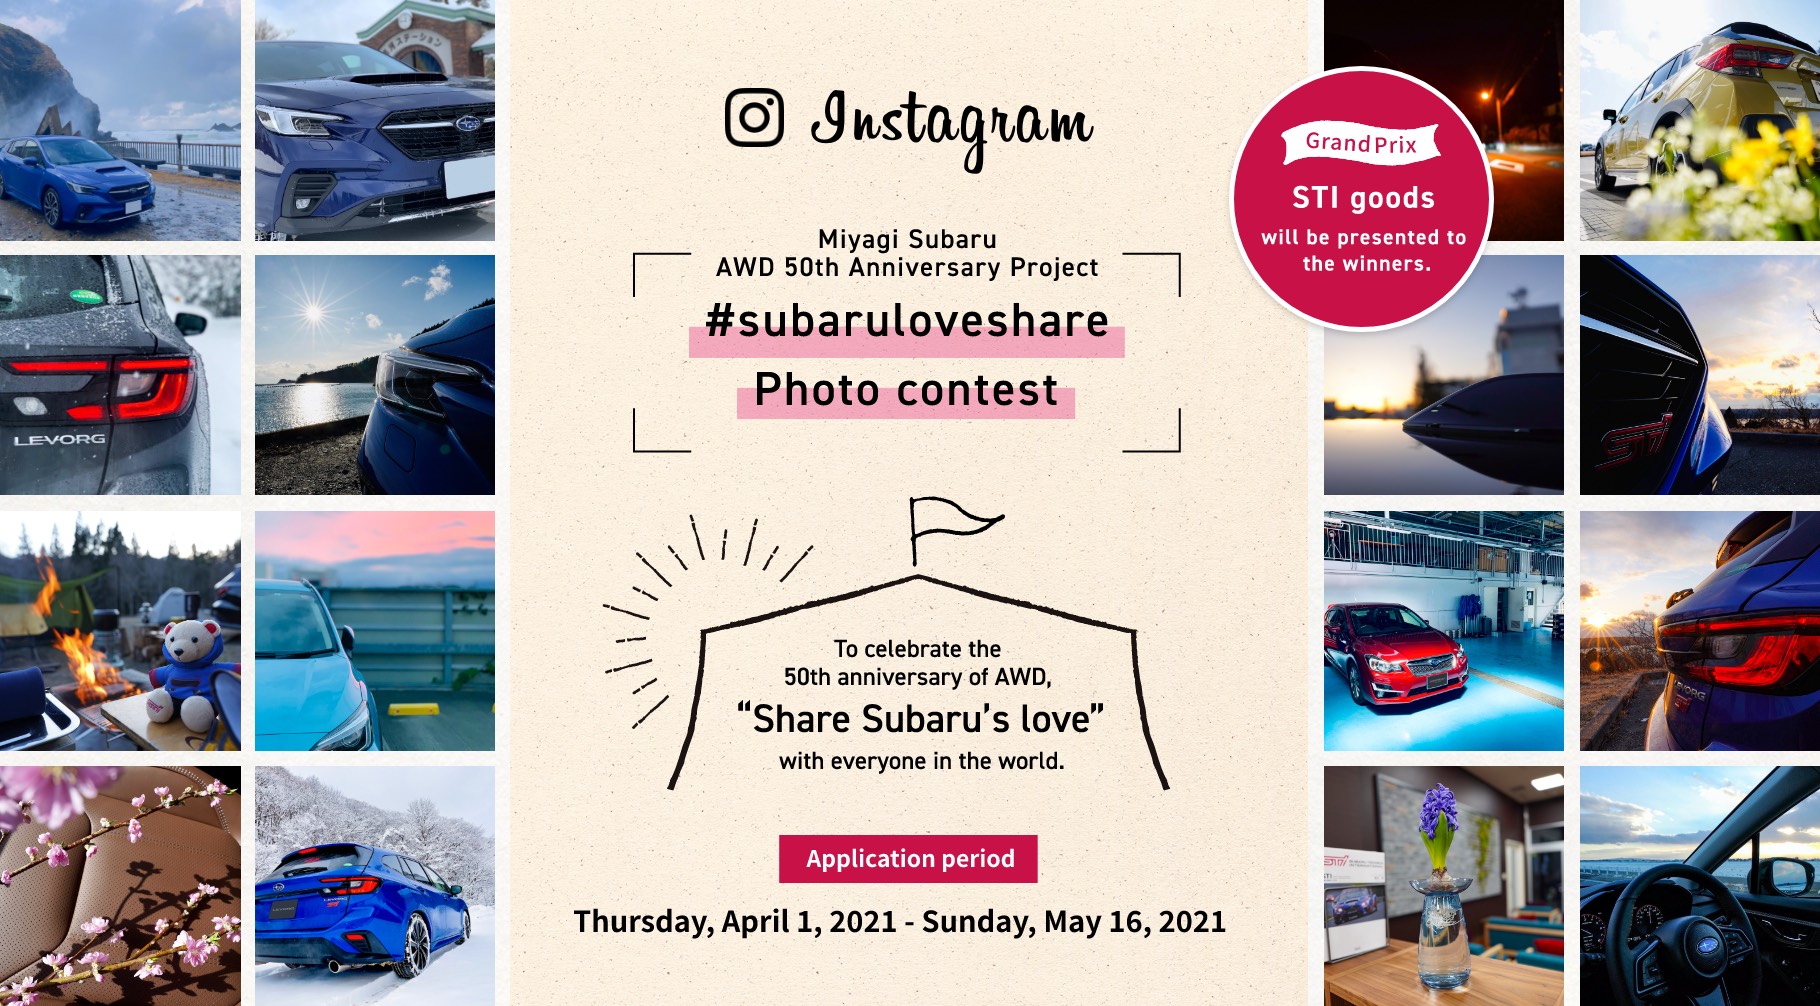 Miyagi SubaruAWD 50th Anniversary Project. Share Subaru’s love photo contest